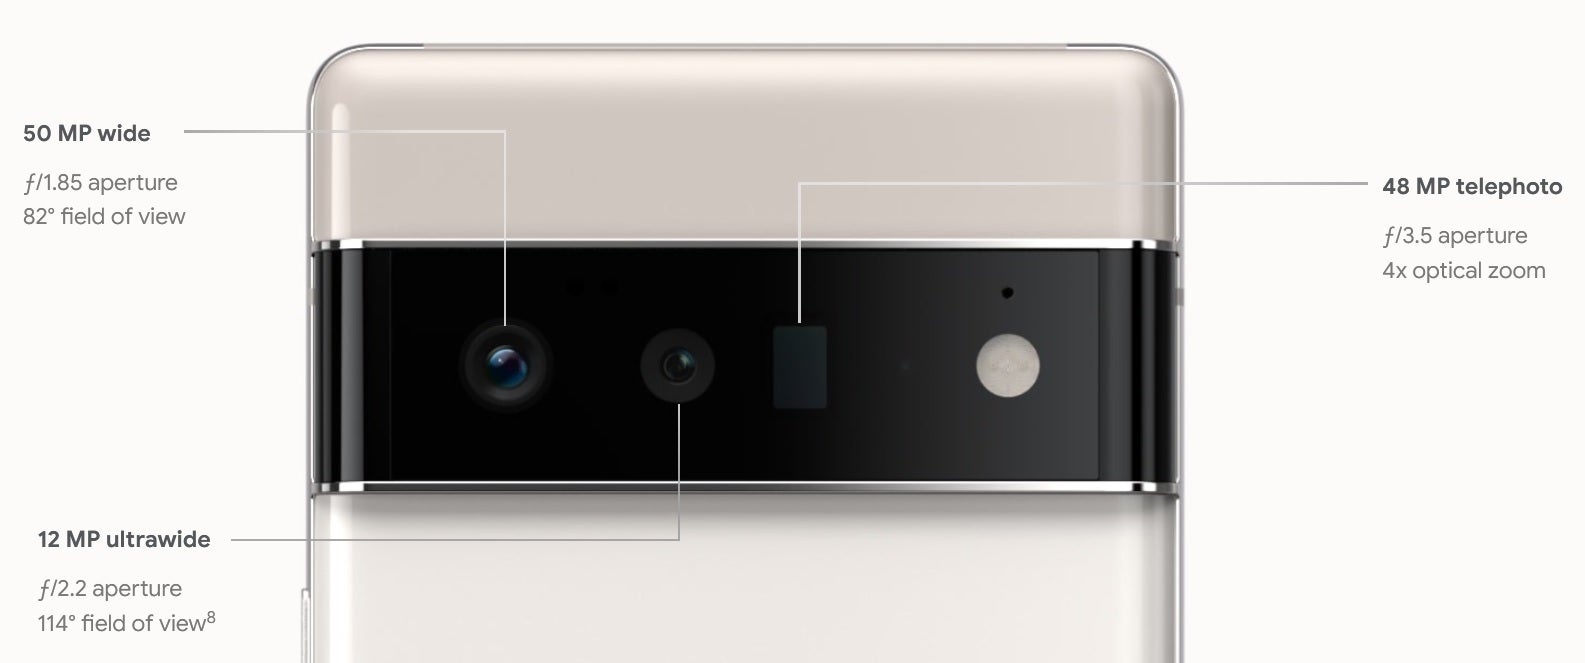 Pixel 6 Pro rear camera array - Man orders 5G Pixel 6, receives free "upgrade" to Pixel 6 Pro